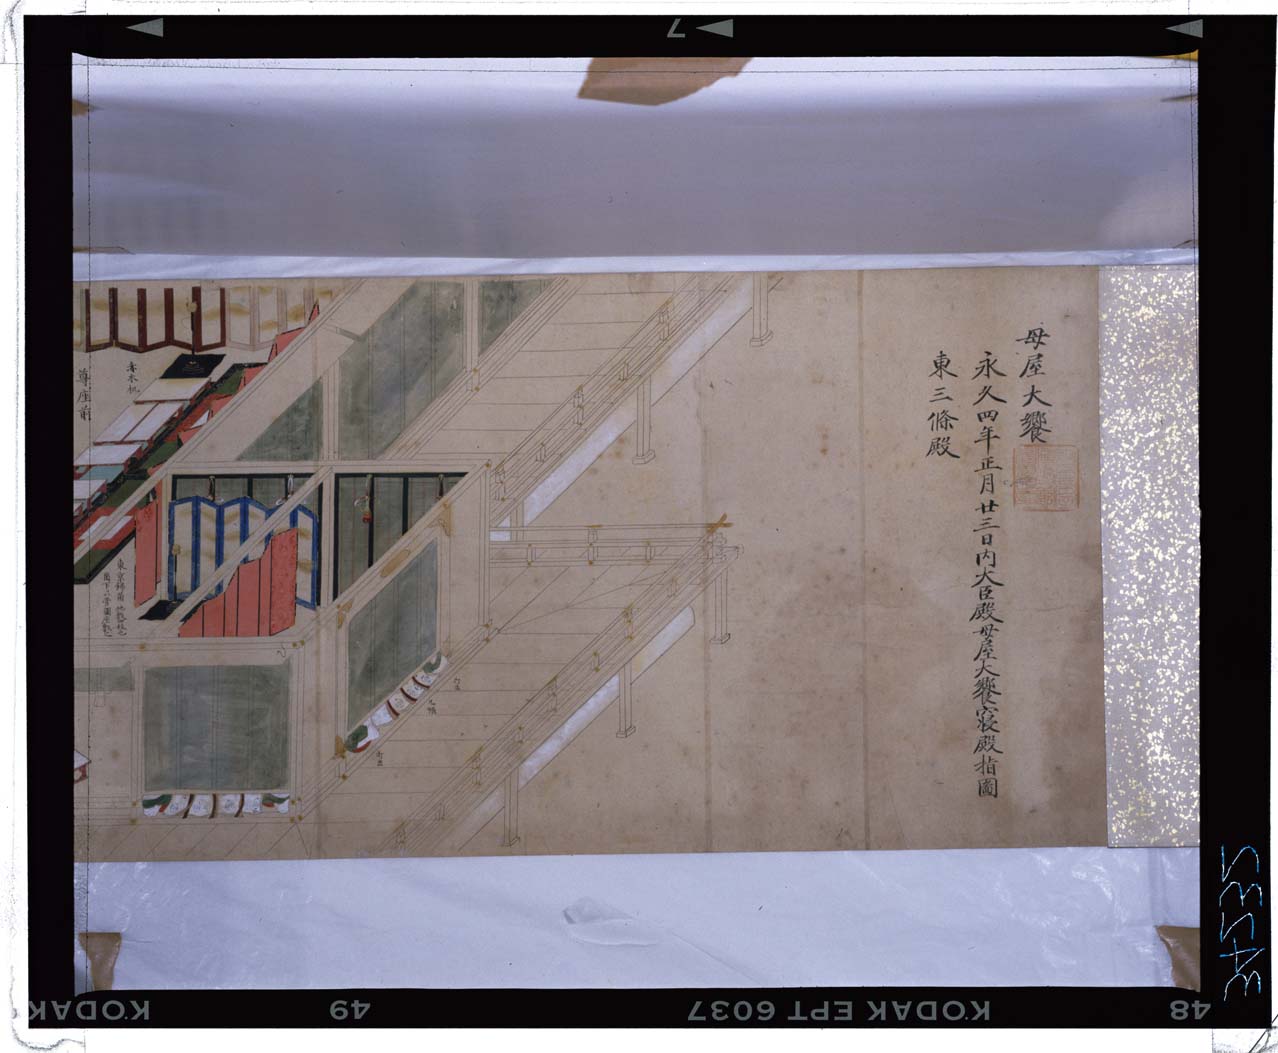 C0034232 類聚雑要抄＿巻第1下 - 東京国立博物館 画像検索